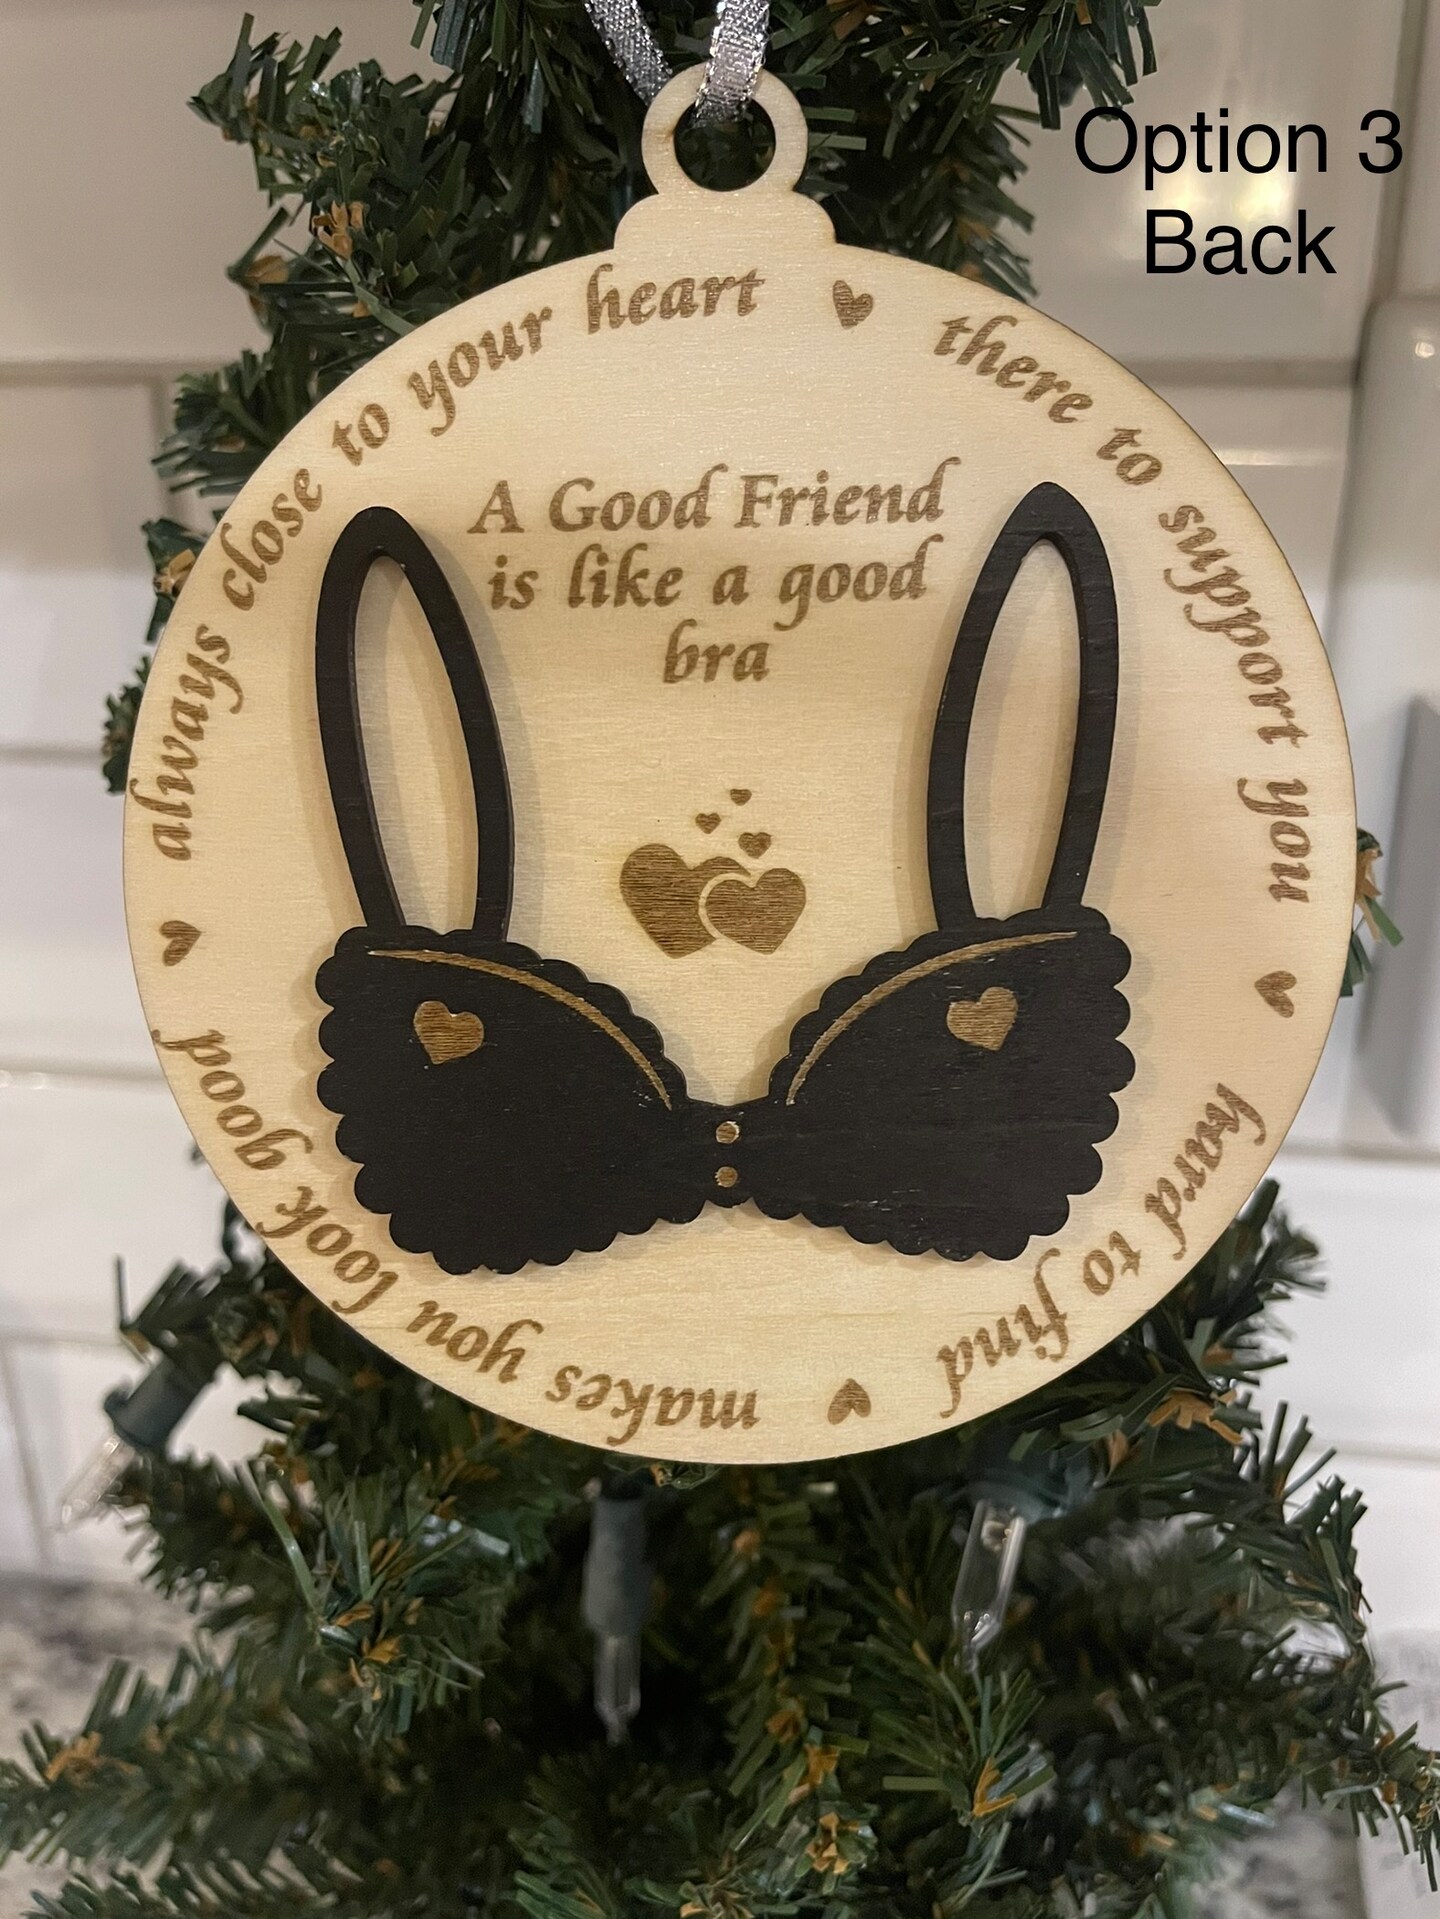 Funny friend ornament - a good friend is like a good bra